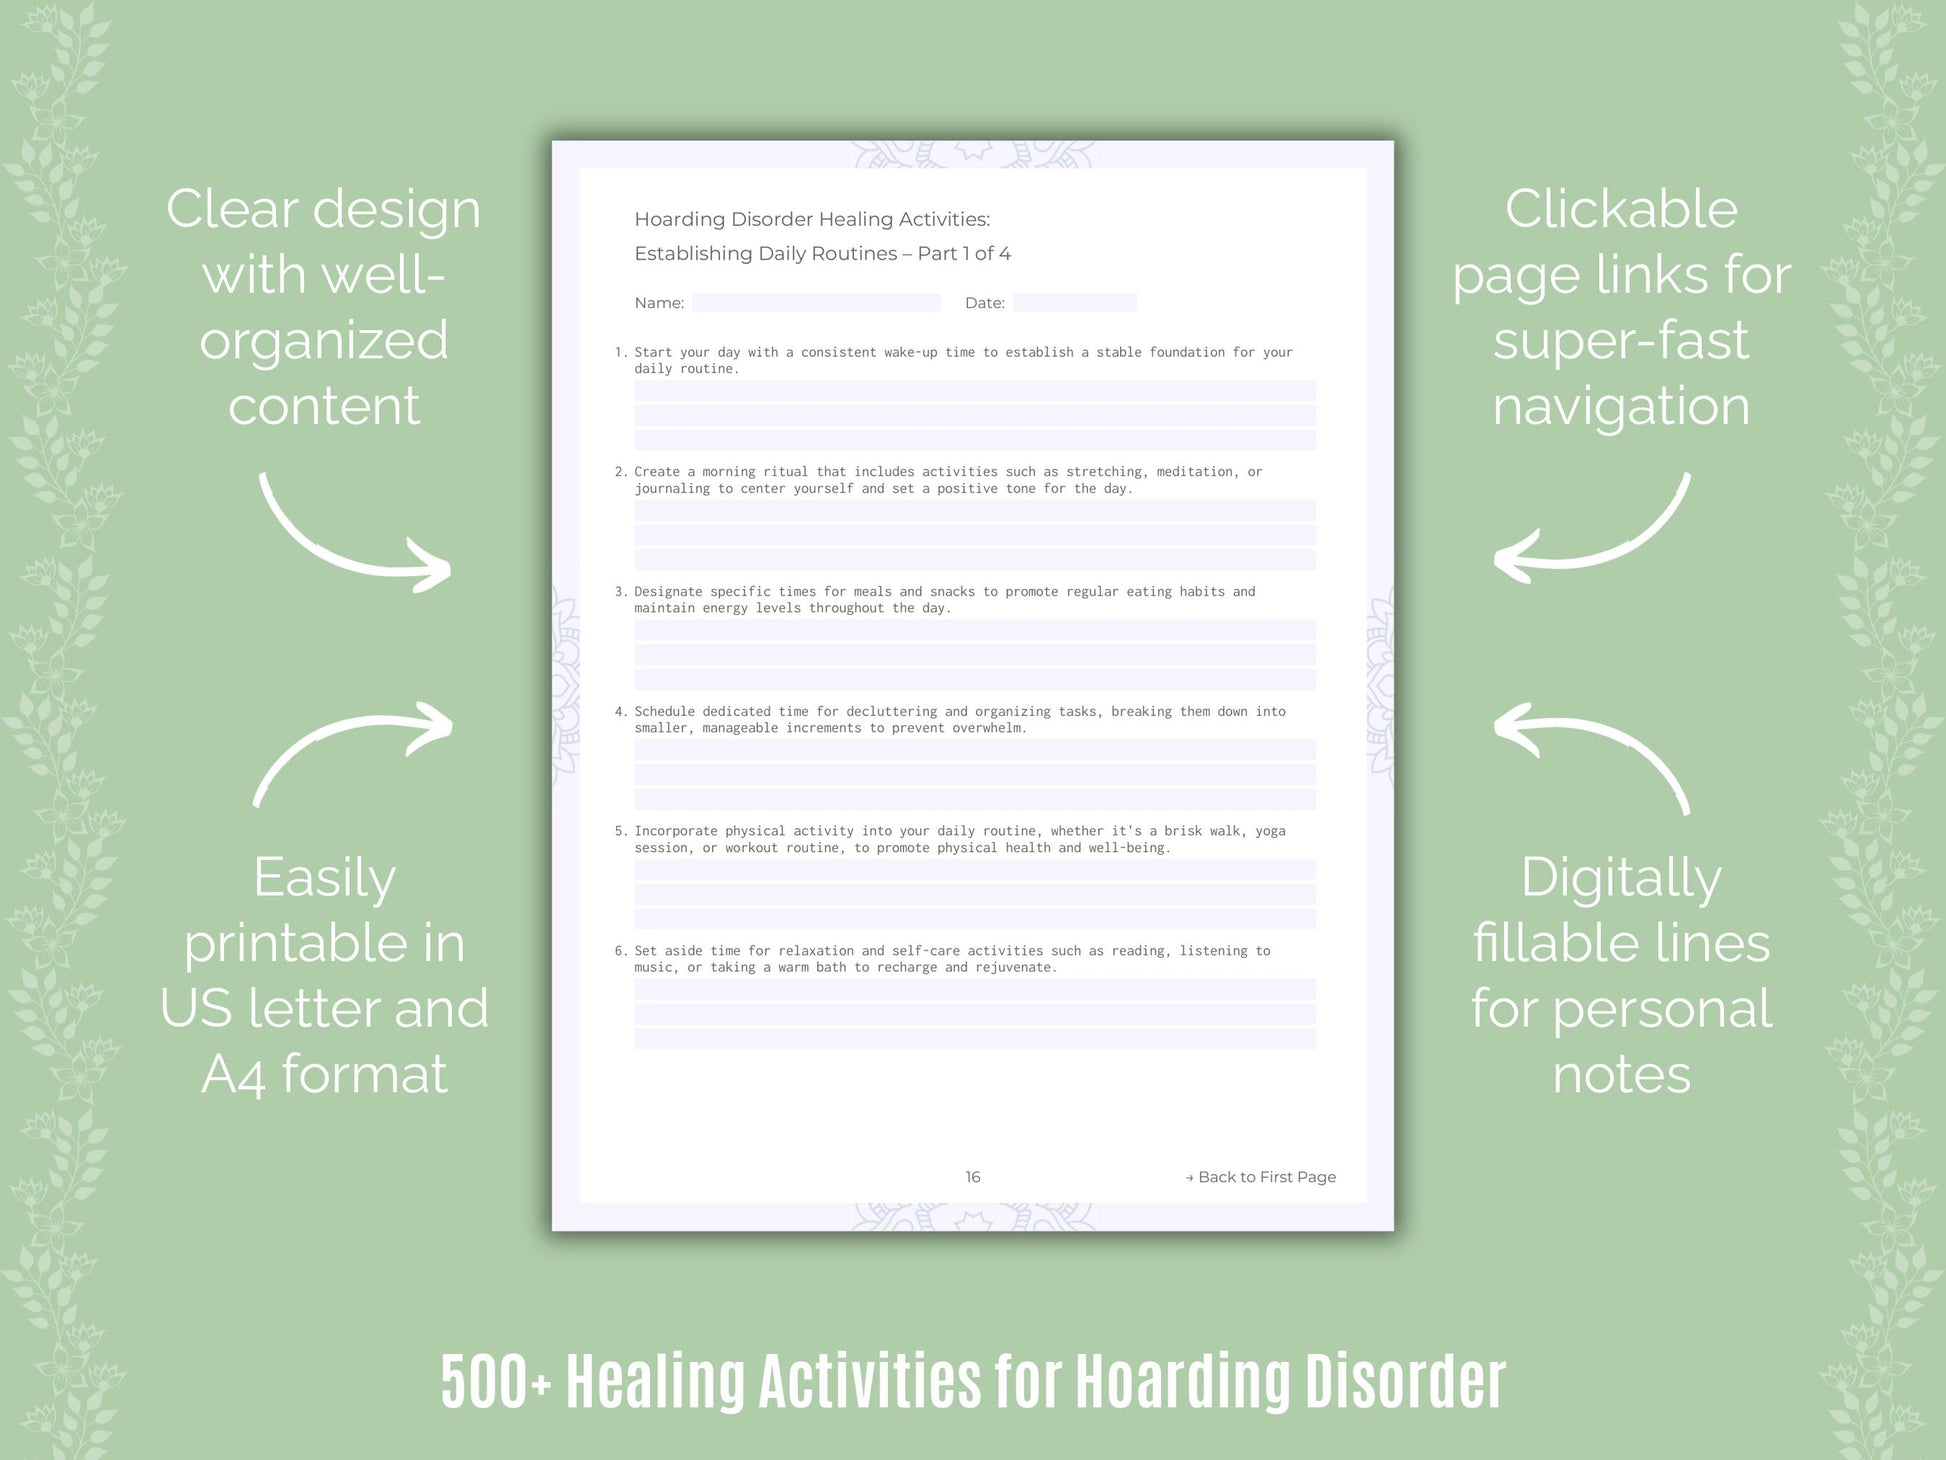 Hoarding Disorder Mental Health Resource